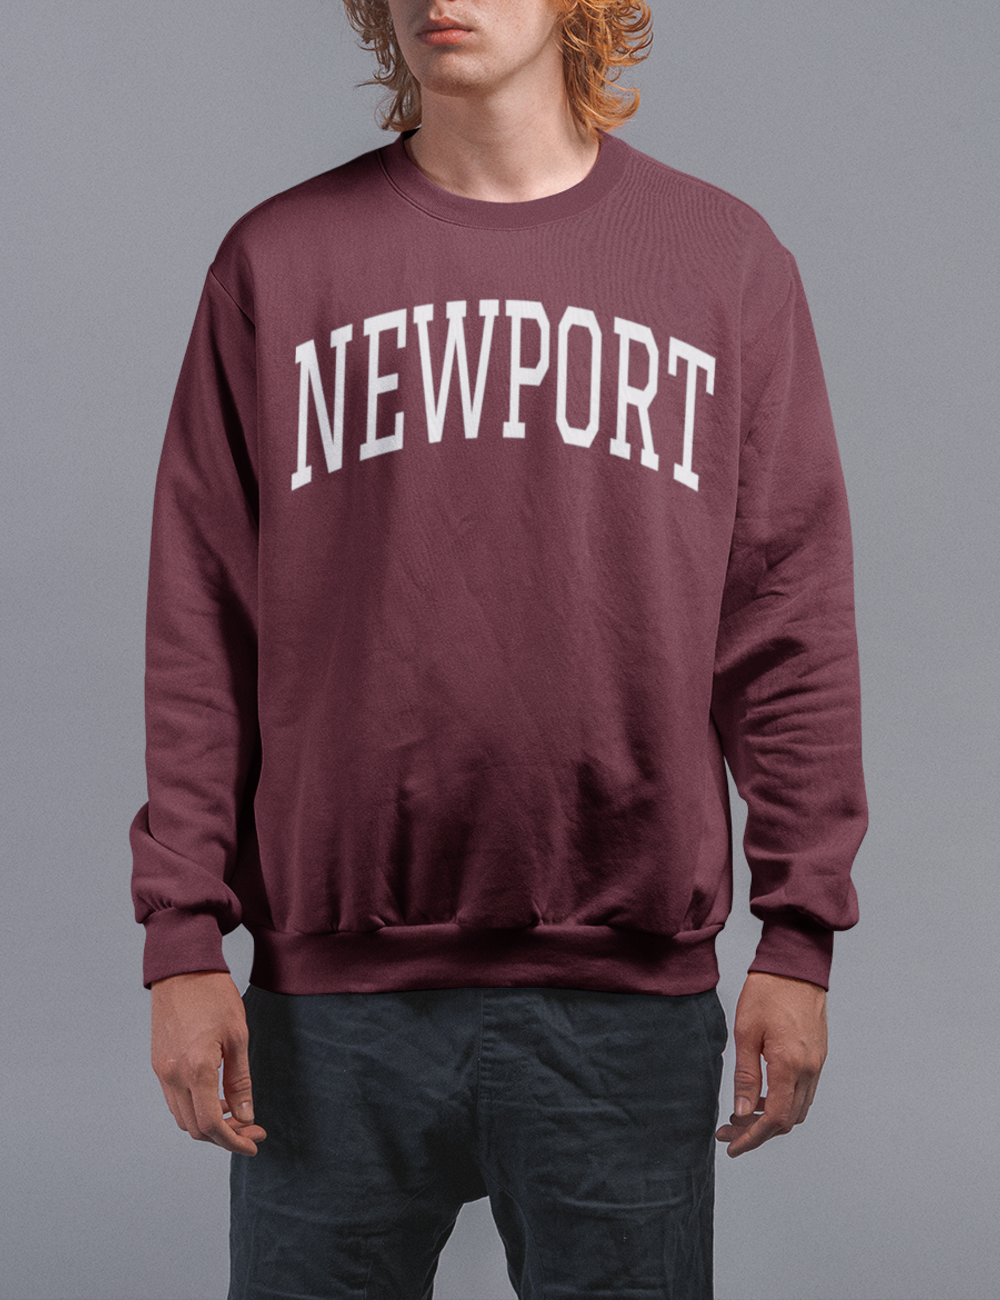 Newport Men's Crewneck Sweatshirt OniTakai